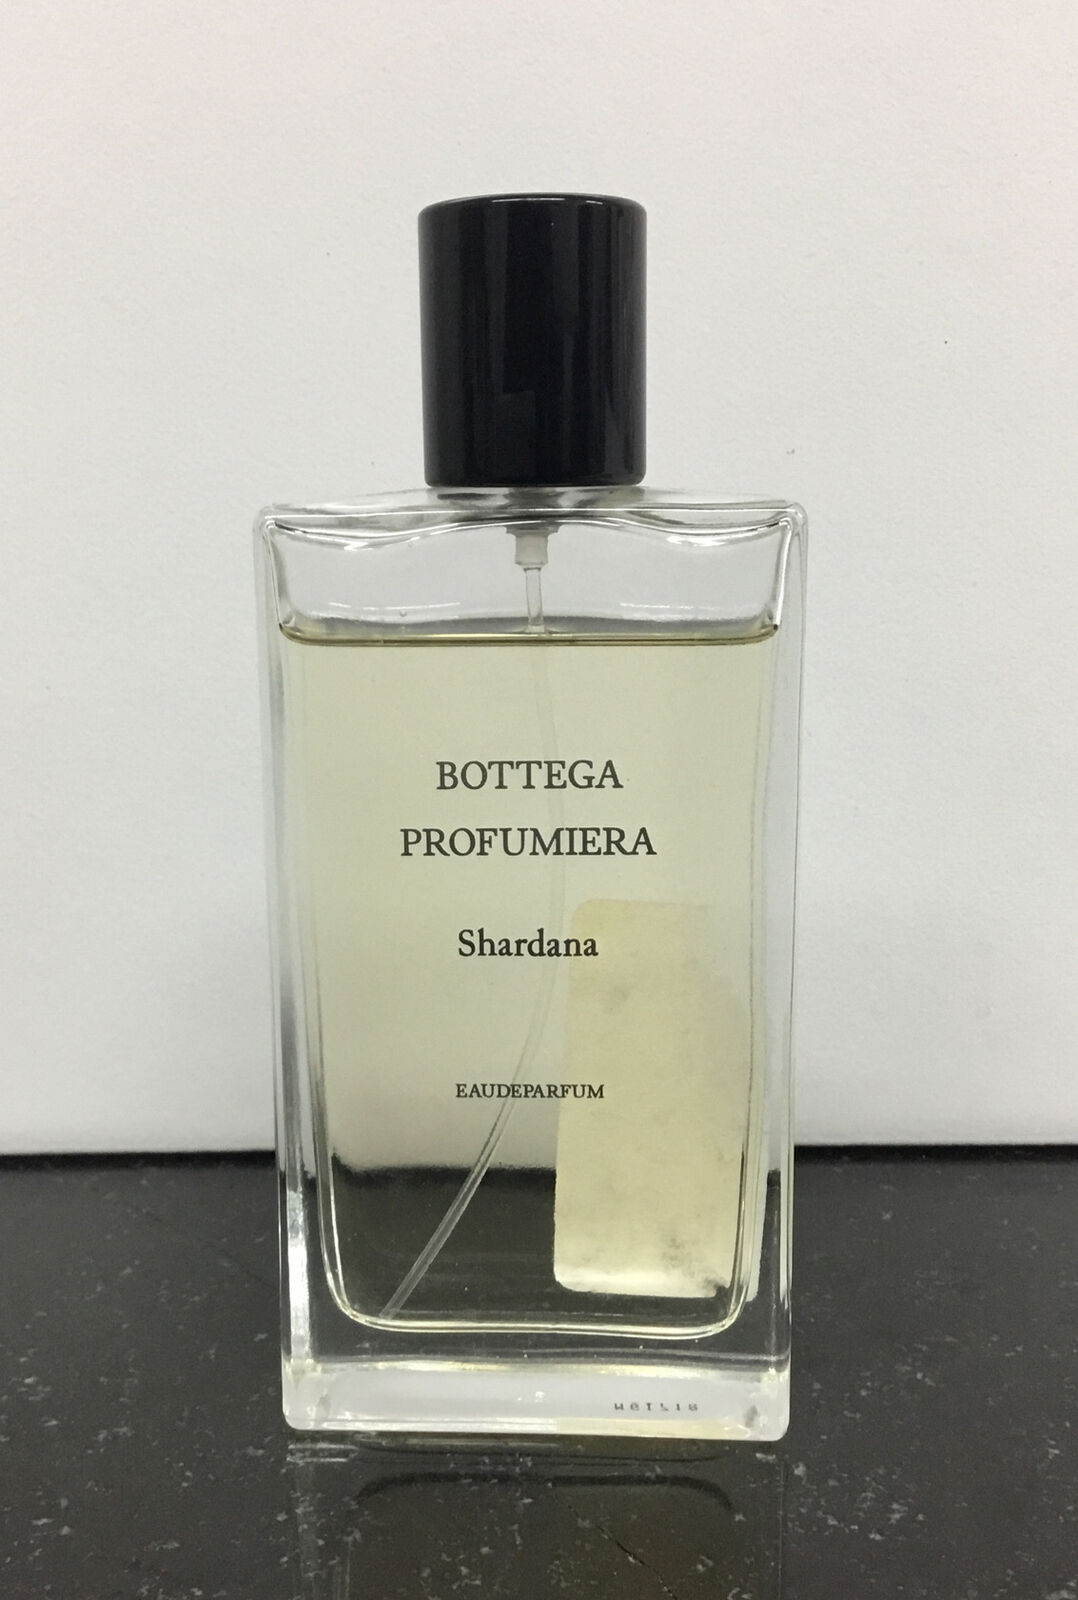 Bottega Profumiera Shardana Eau De Parfum 3.4 fl Oz, As Pictured